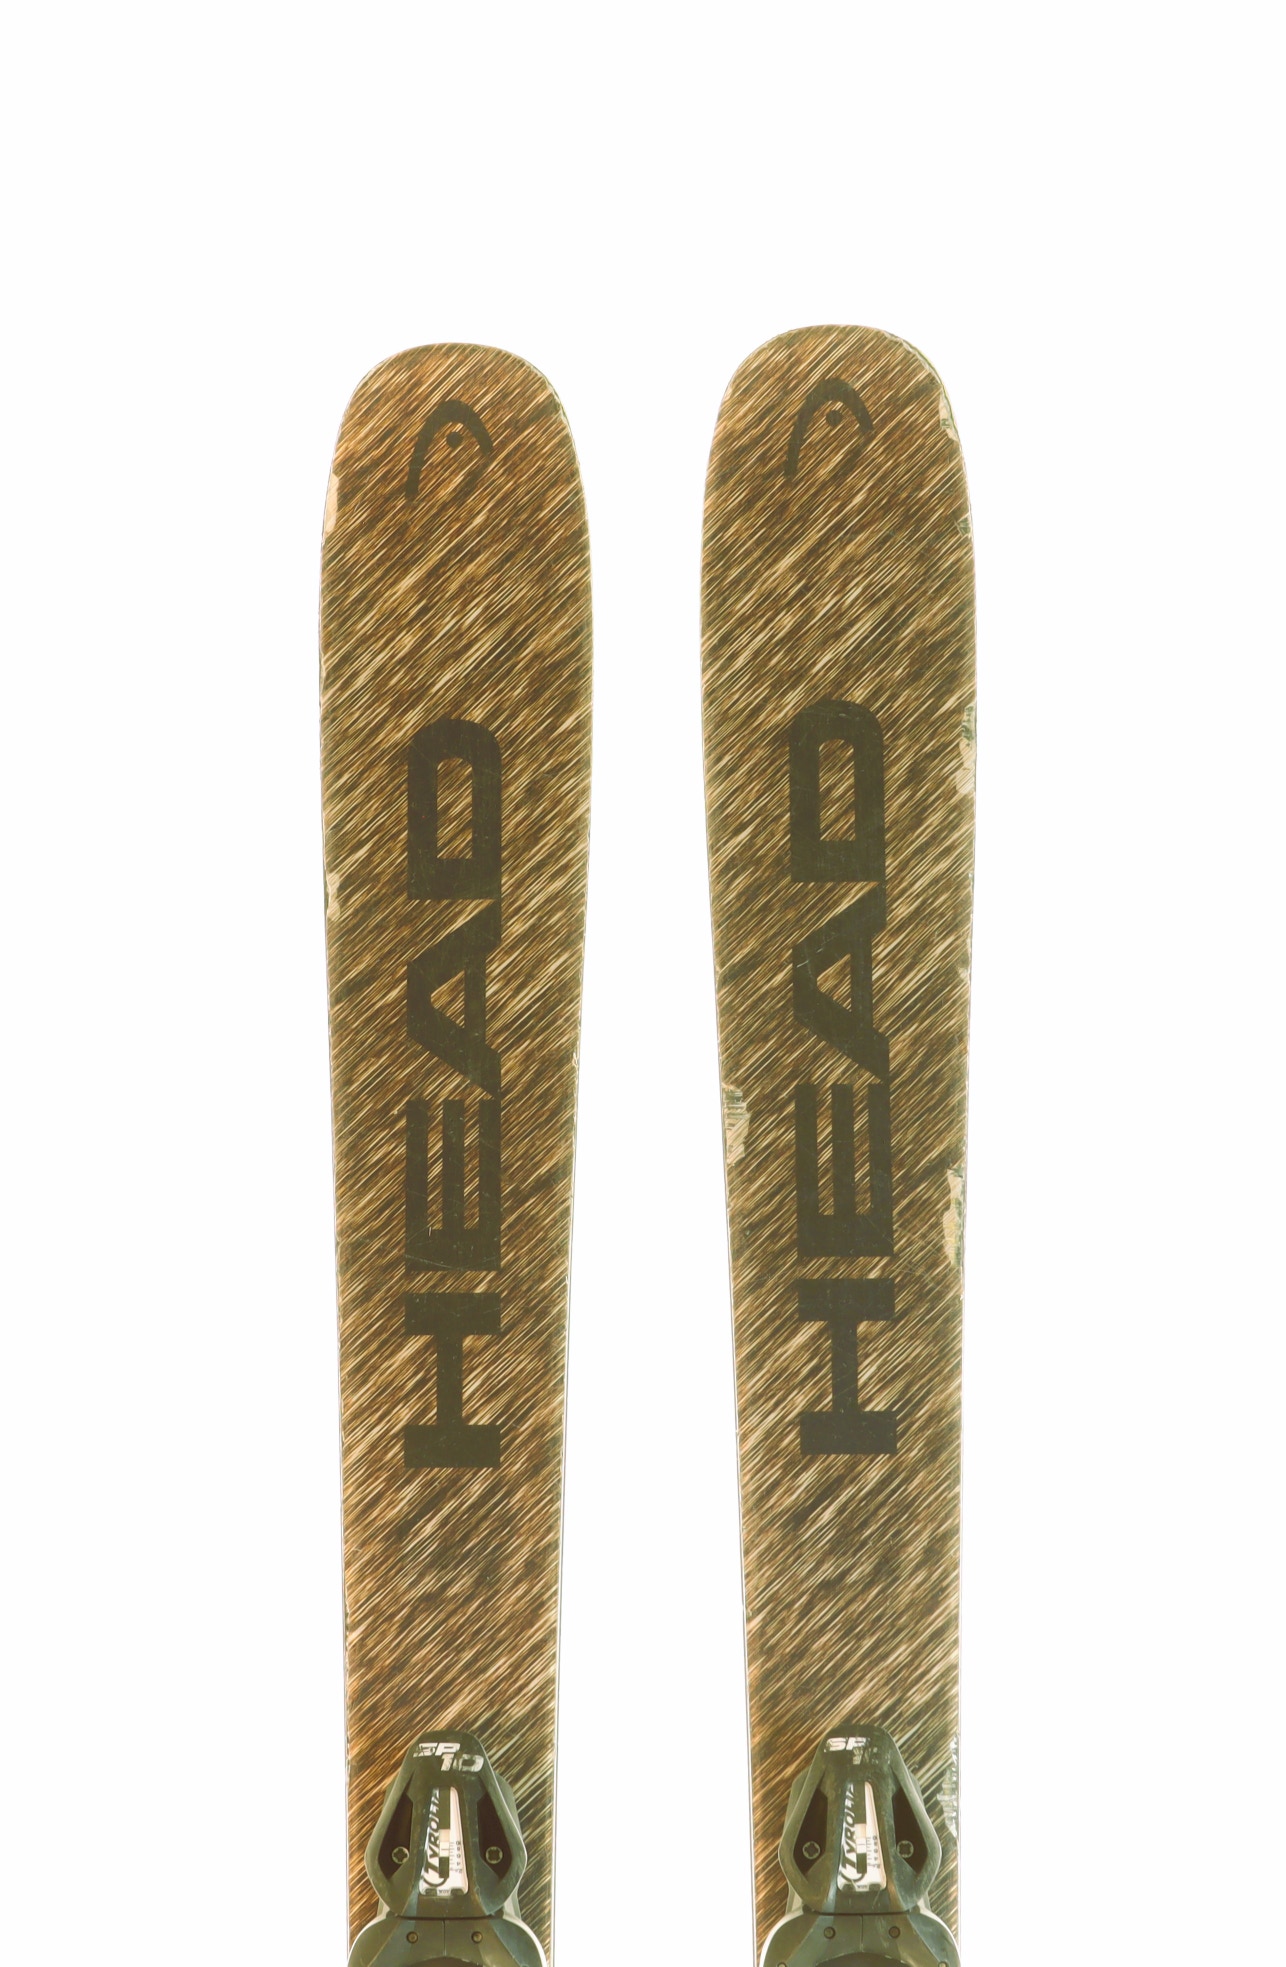 Used 2020 Head Kore 93 Skis With Tyrolia SP 10 Bindings Size 125 (Option 230775)